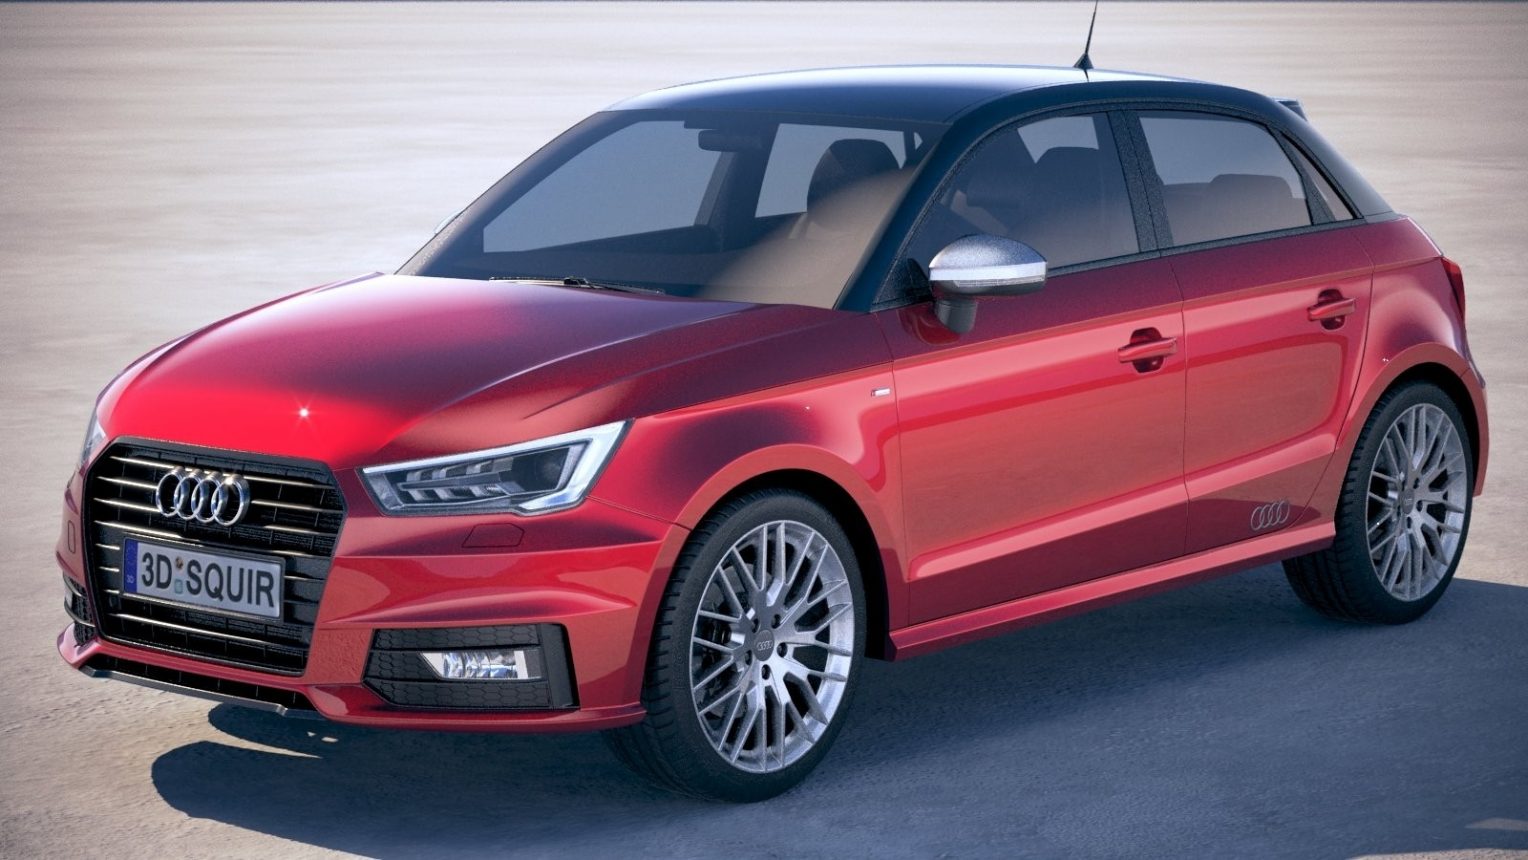 Audi A1 2019 Price in Pakistan Specs Features Release Date Interior